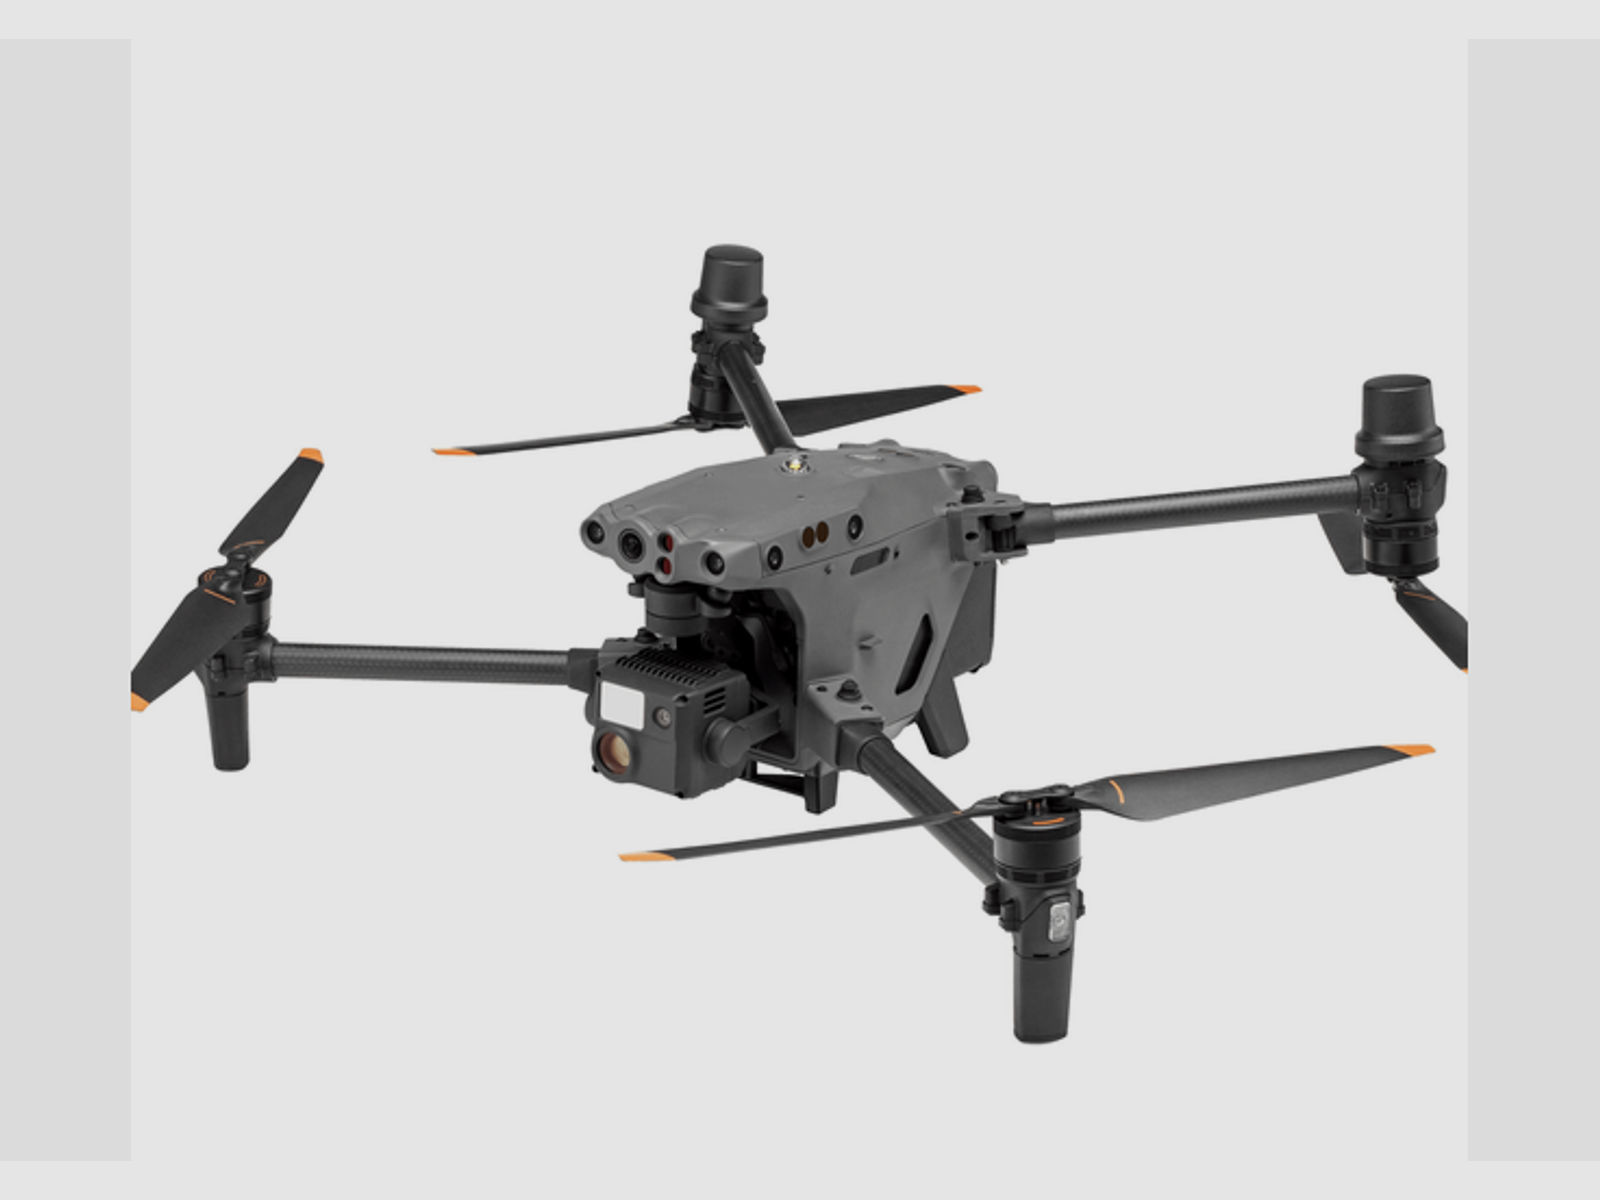 DJI Matrice M30 Inspektions-Drohne inkl. 1 Jahr Wartungsservice